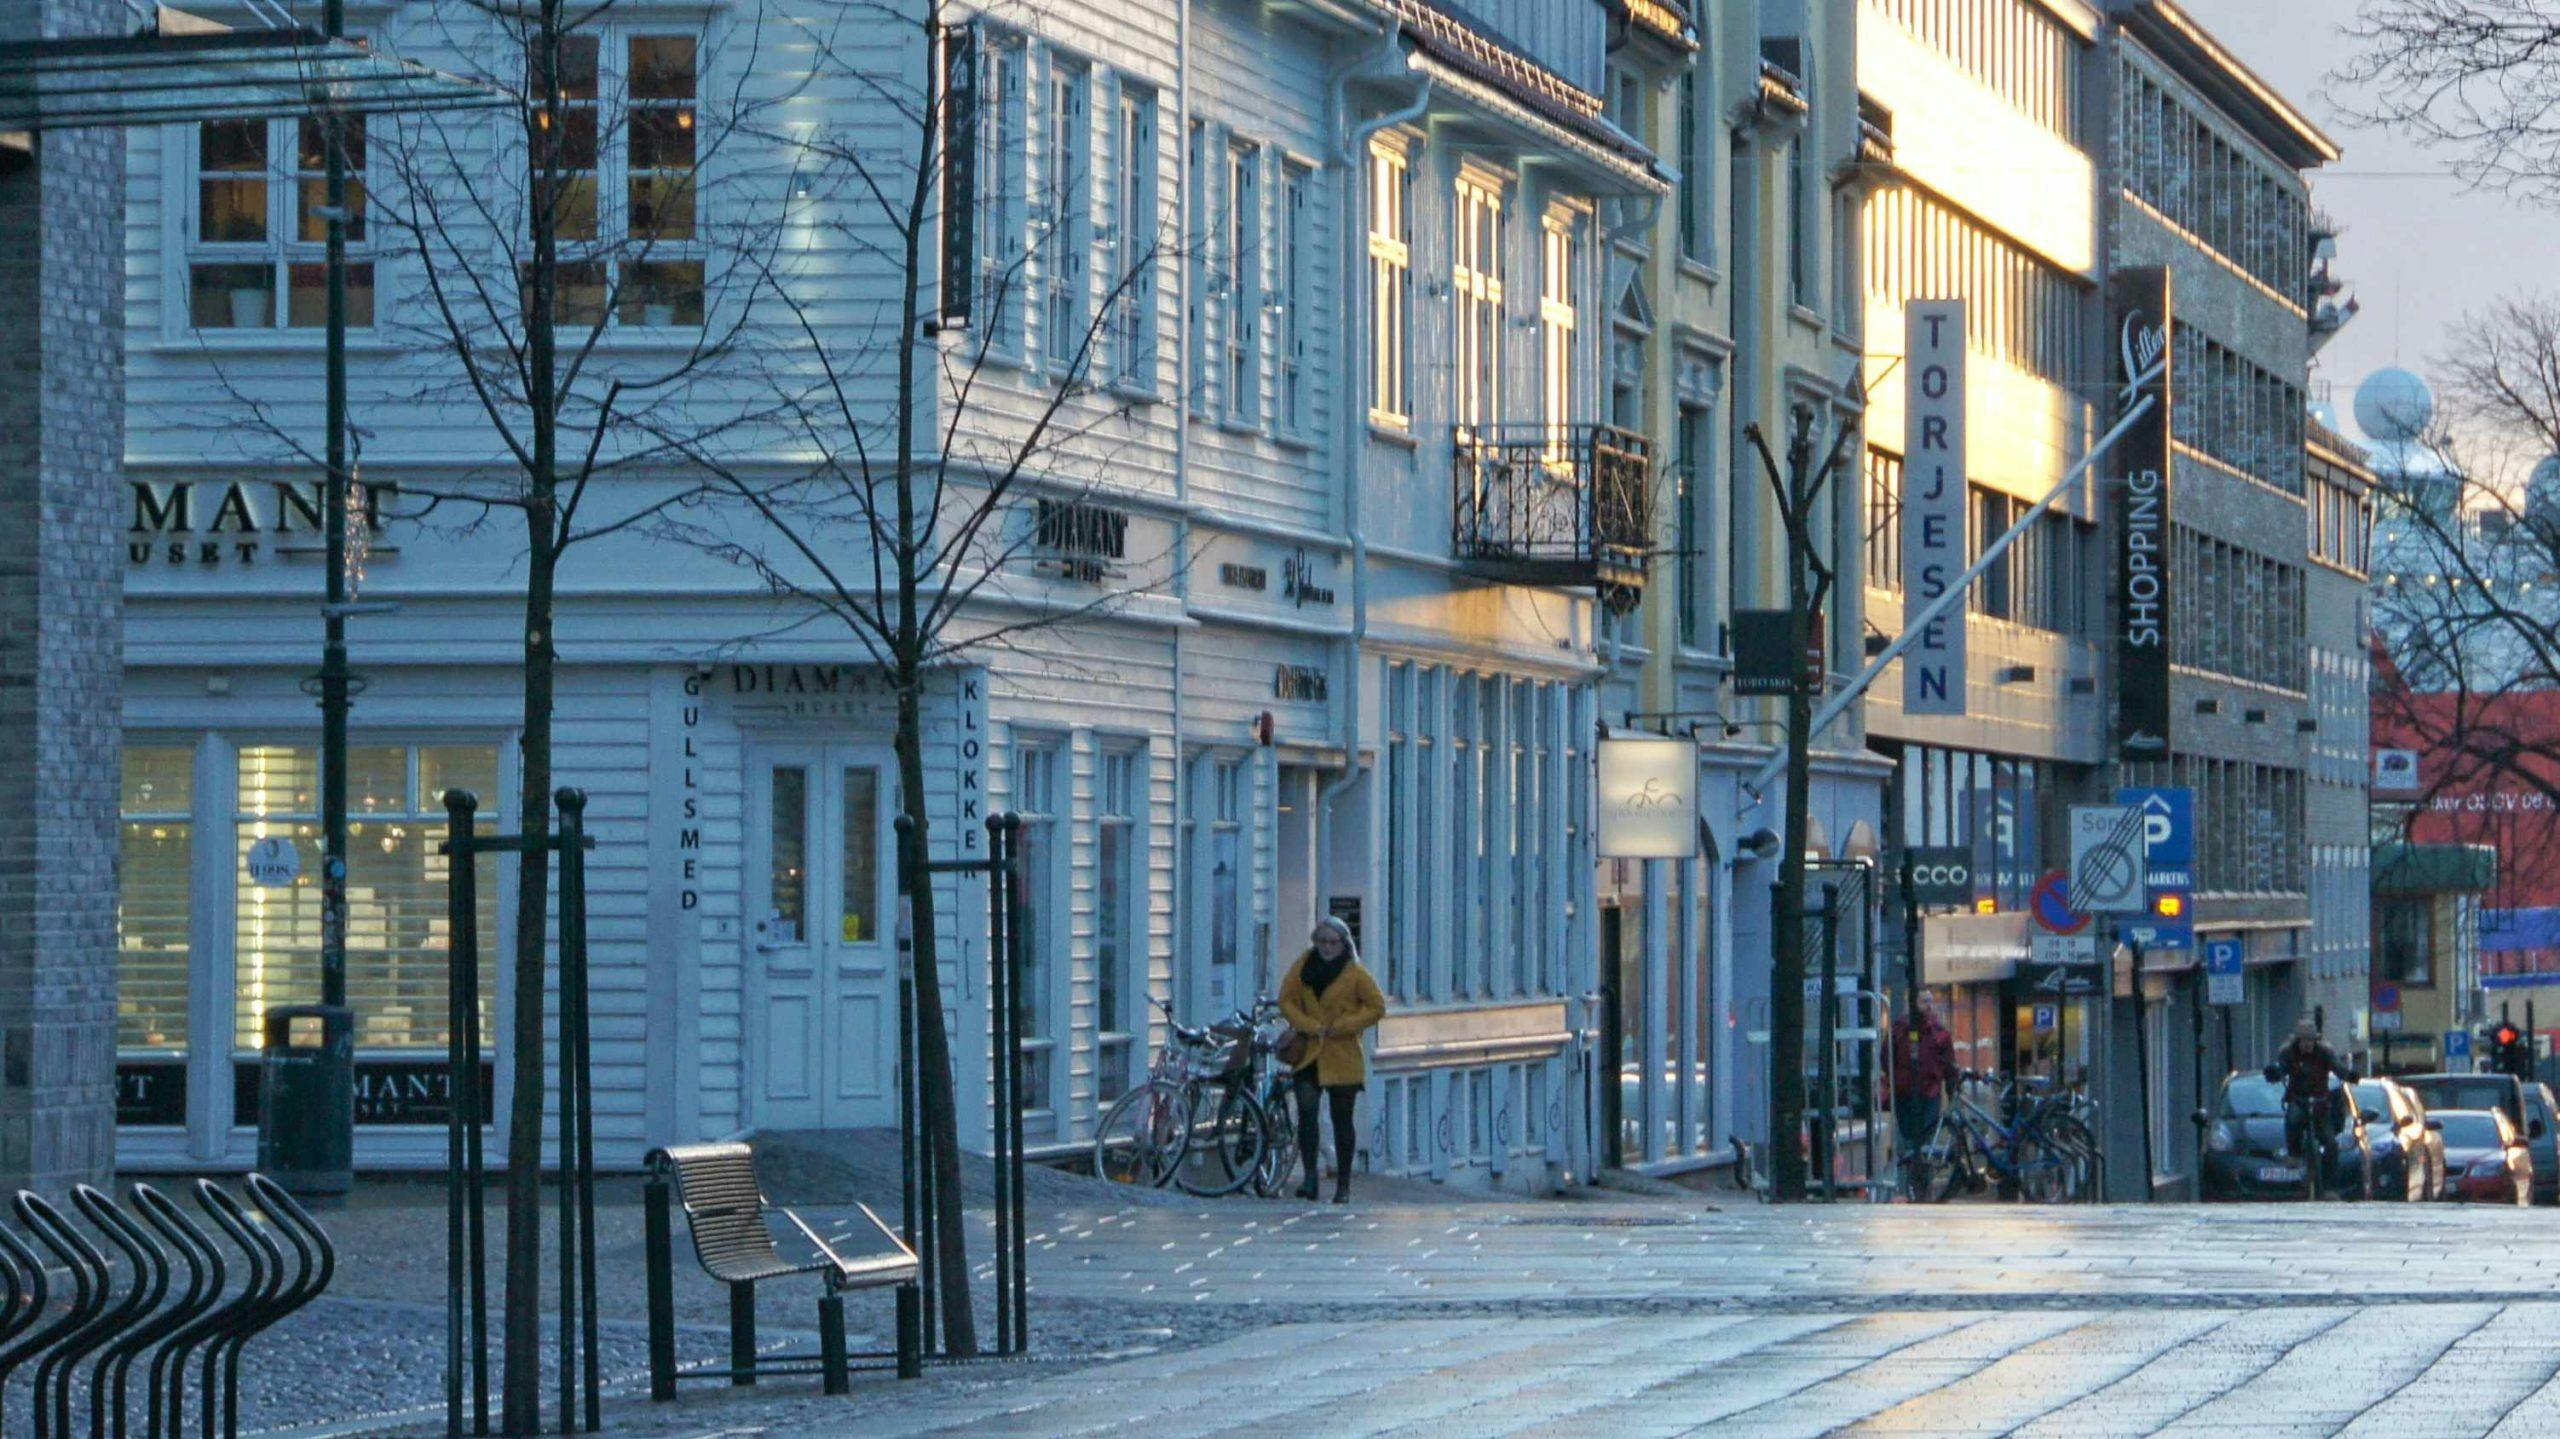 Picture of Kristiansand city centre, taken by Gunnar Ridderstrøm